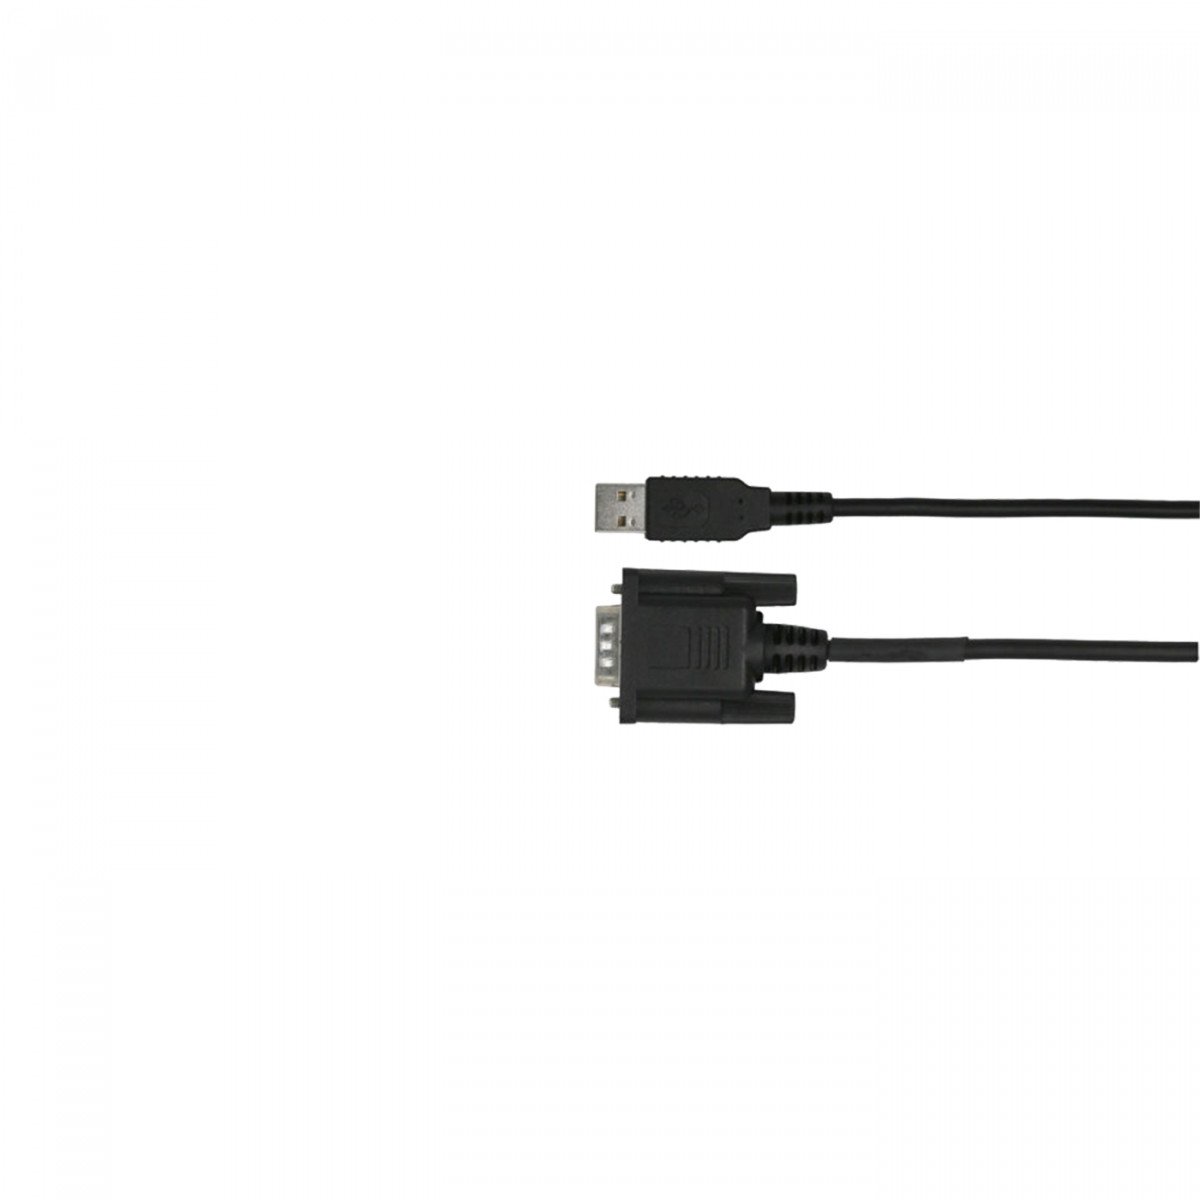 SEPURA USB-Programmier-/Datenkabel für SCG, USB 2.0 300-02009